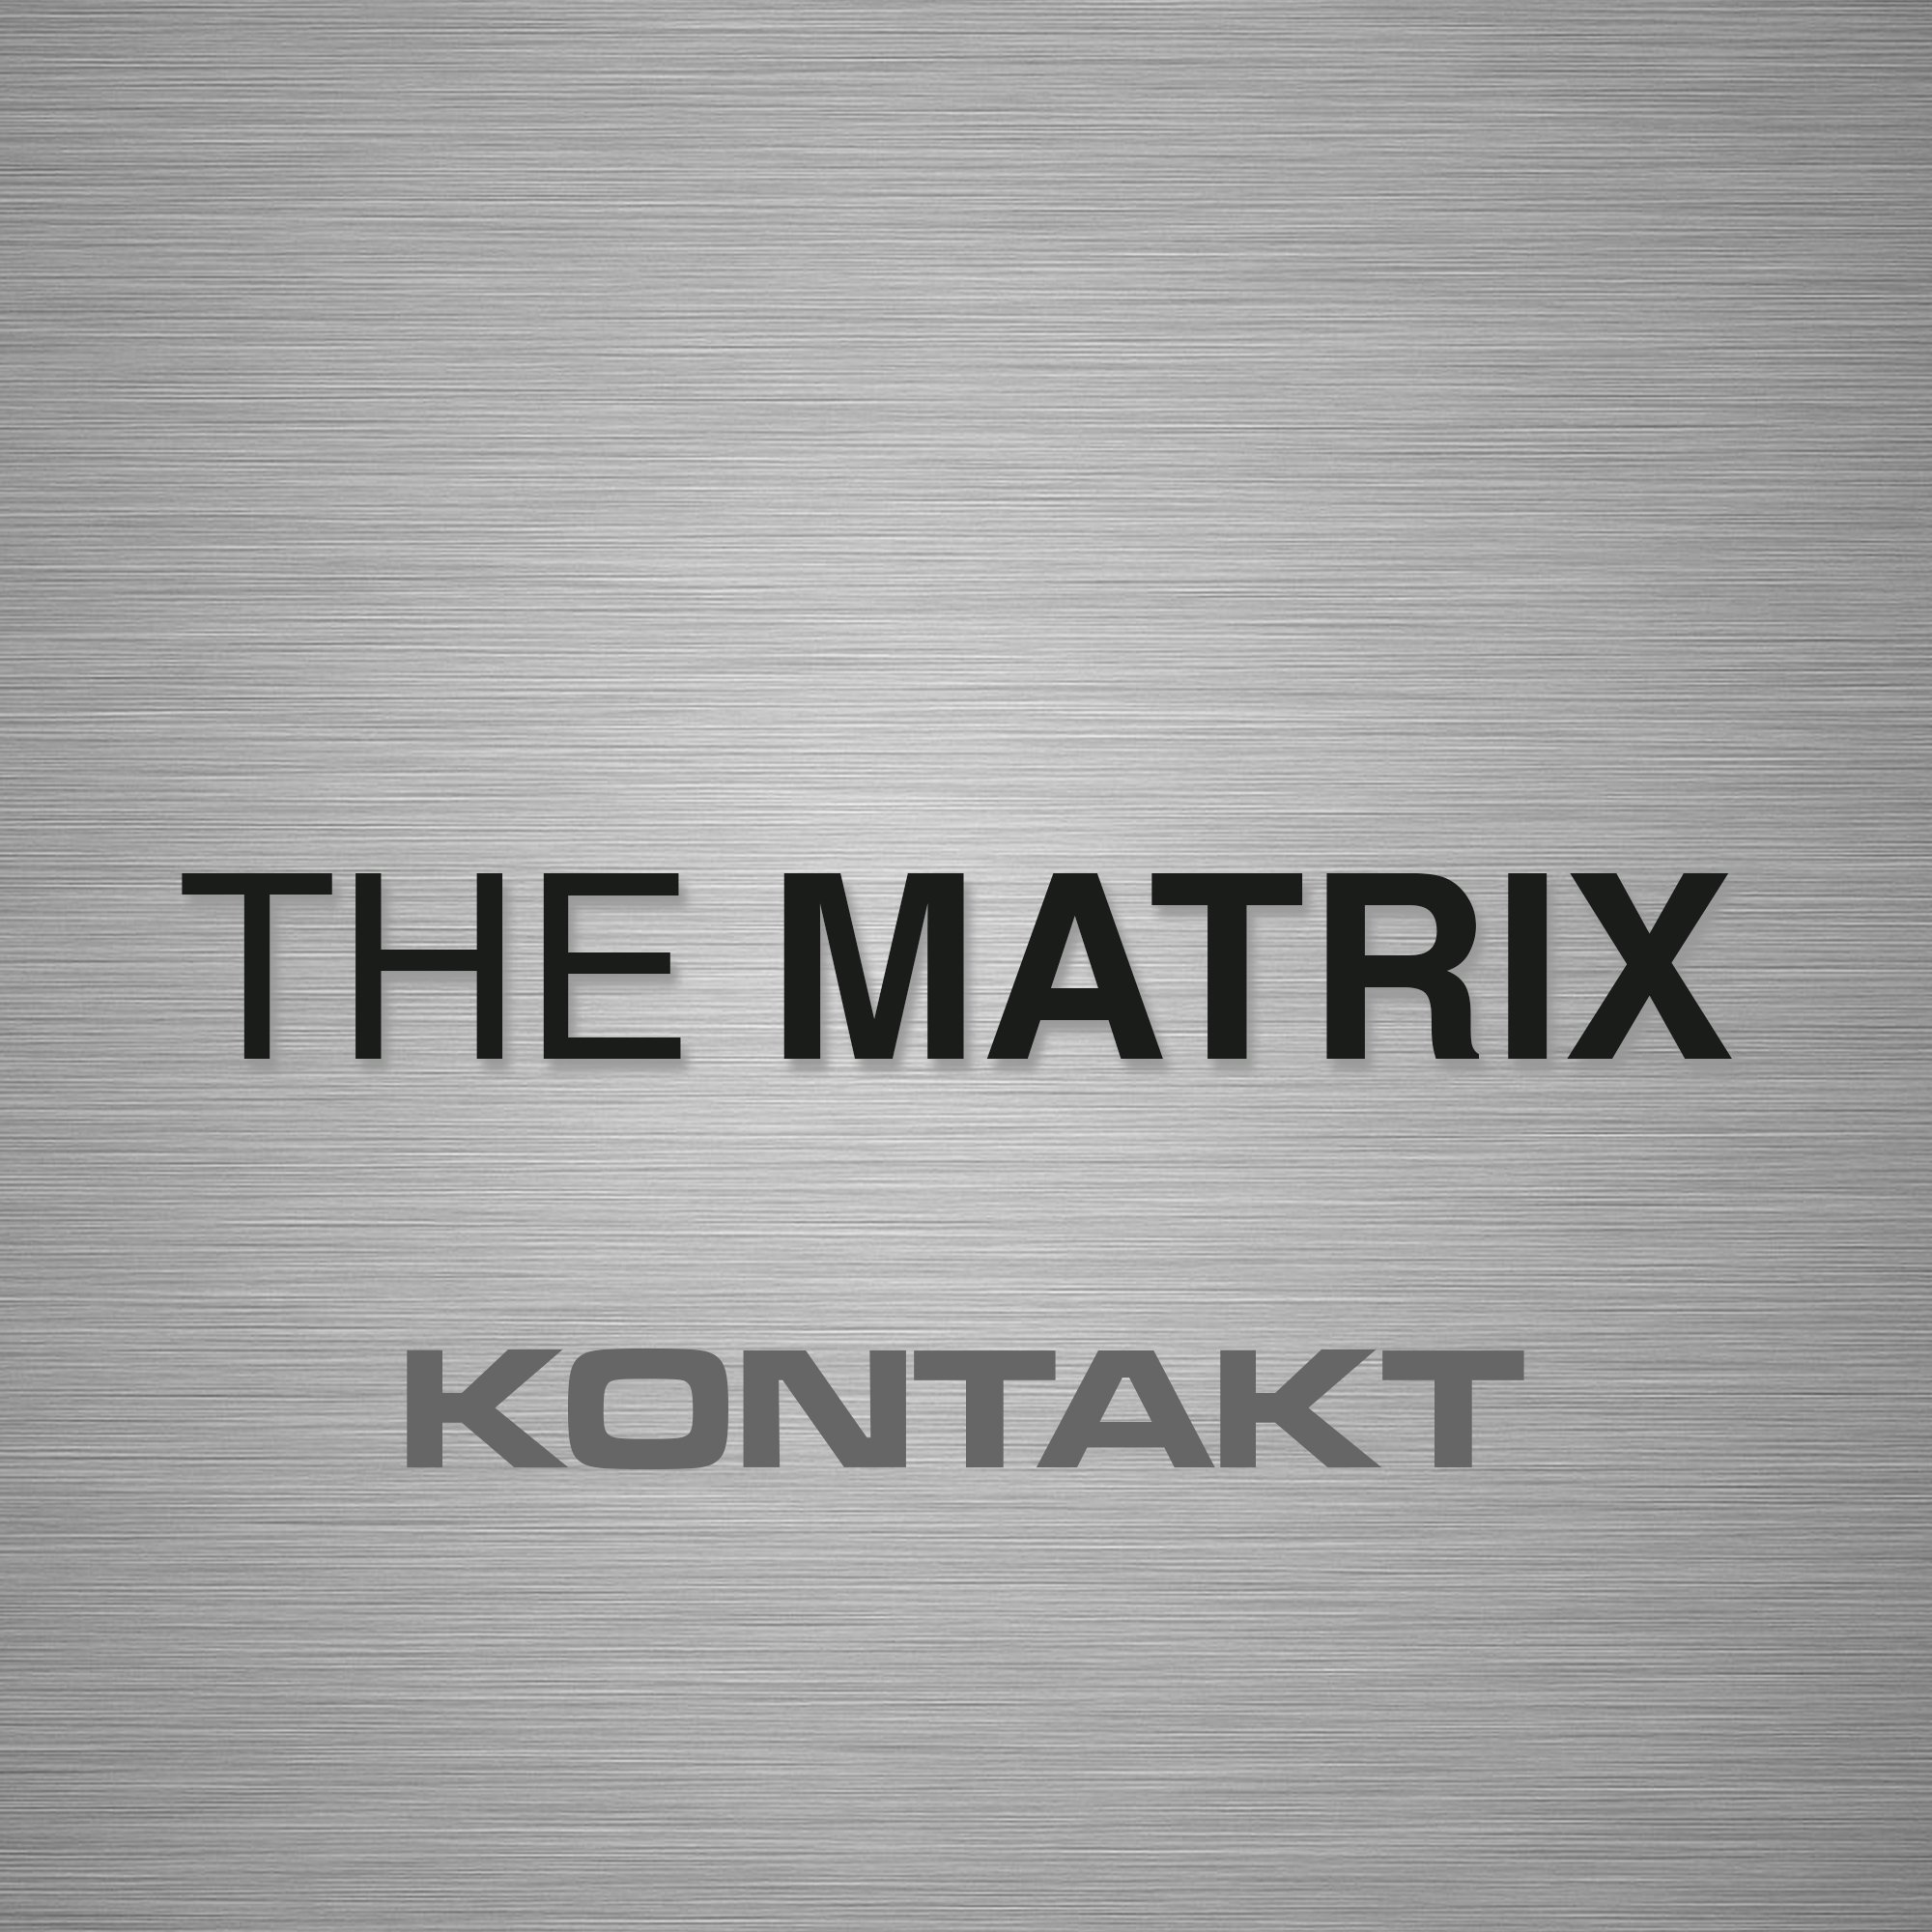 The Matrix Kontakt Logo.jpg